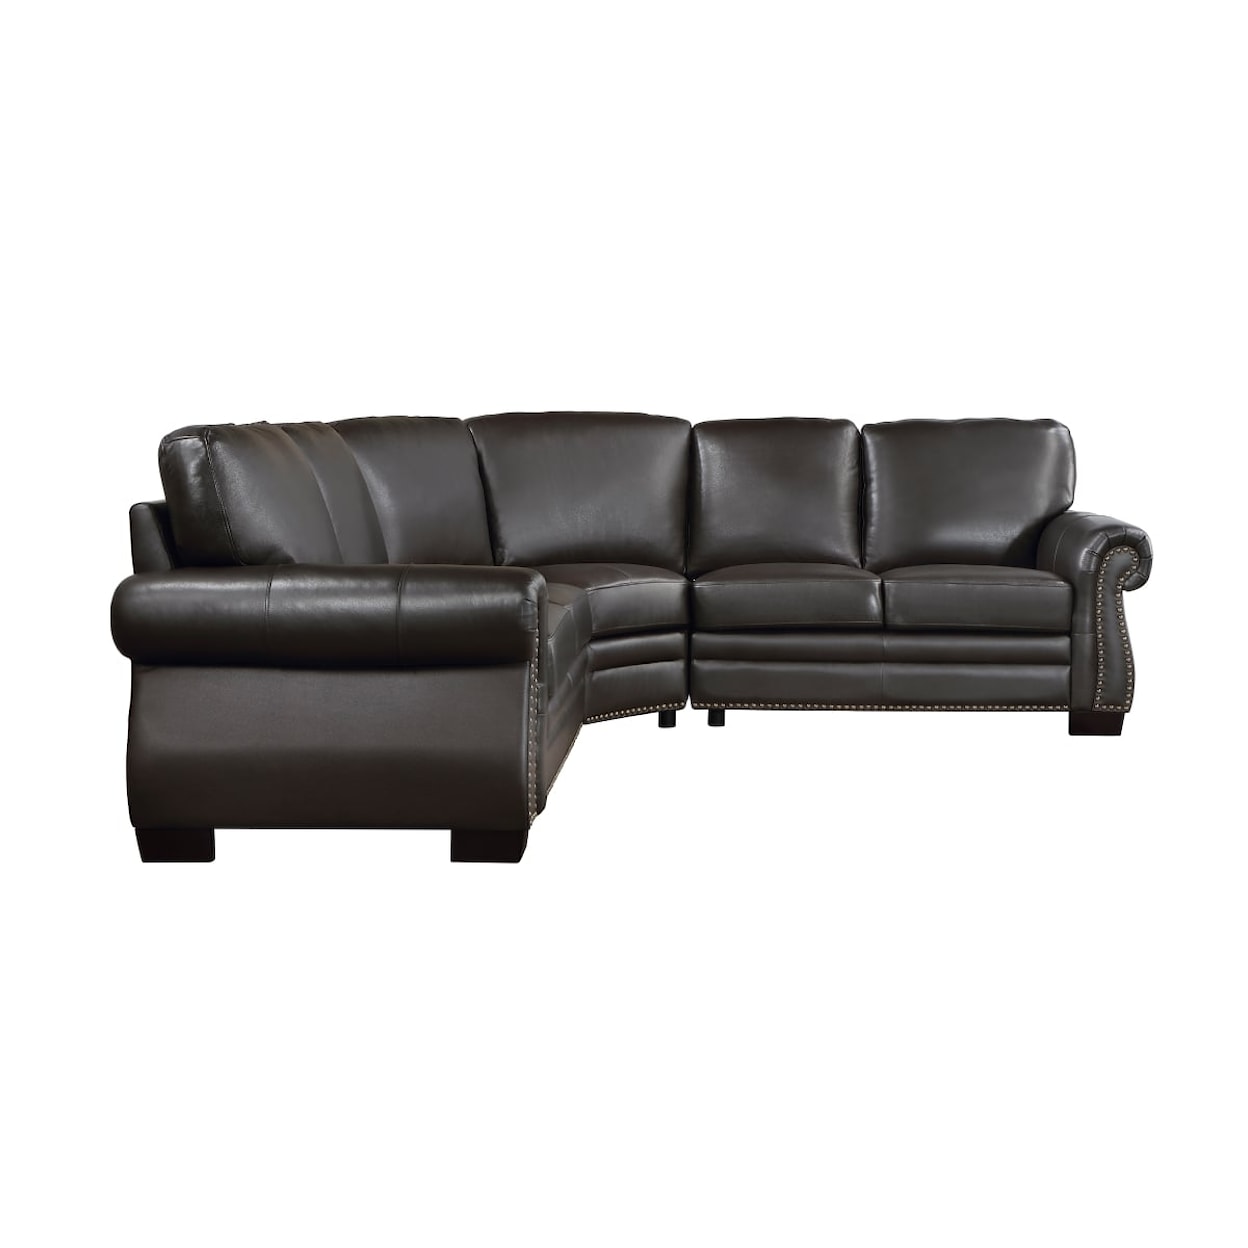 Homelegance Wareham 3-Piece Sectional Sofa